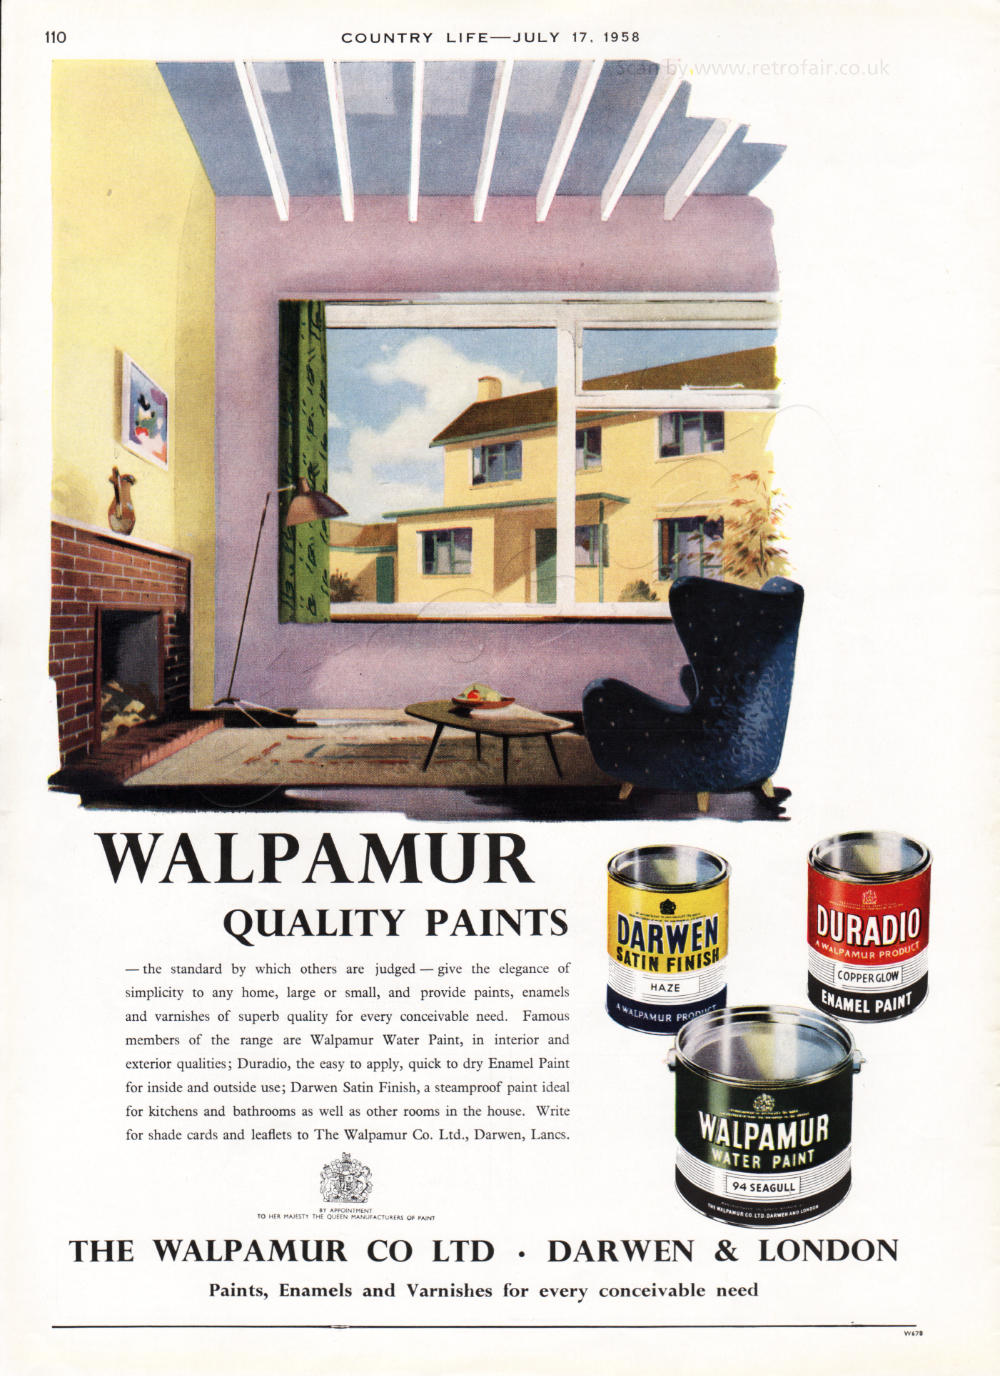 1958 Walpamur Paints - unframed vintage ad